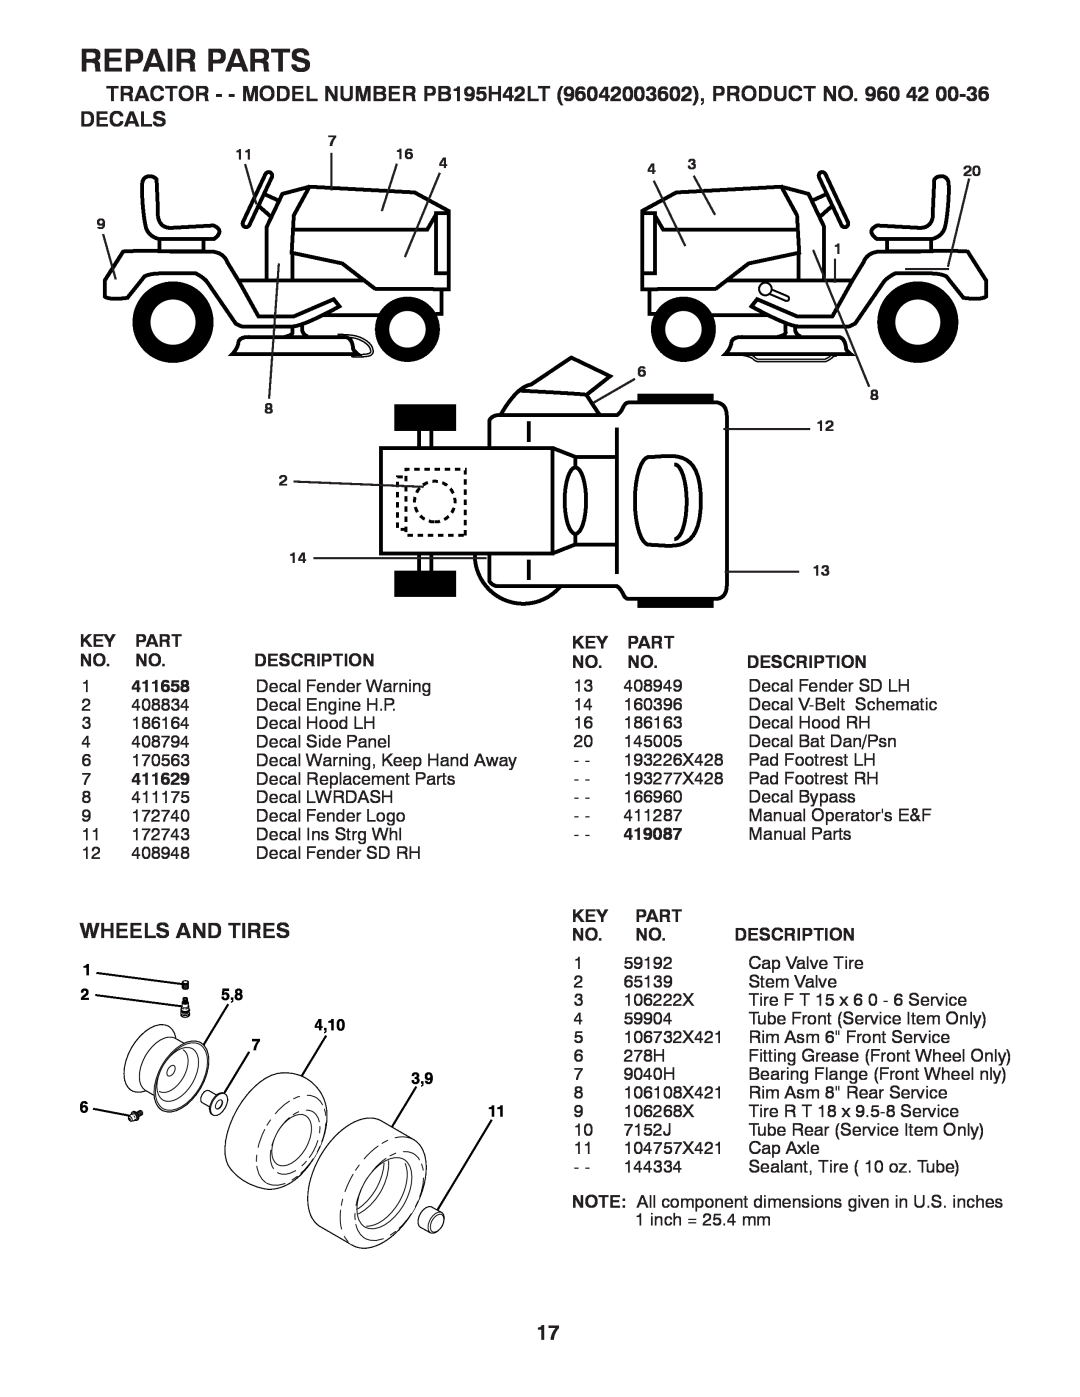 Poulan 96042003602 manual Decals, Wheels And Tires, Repair Parts, Description, 411658, 411629, 419087 